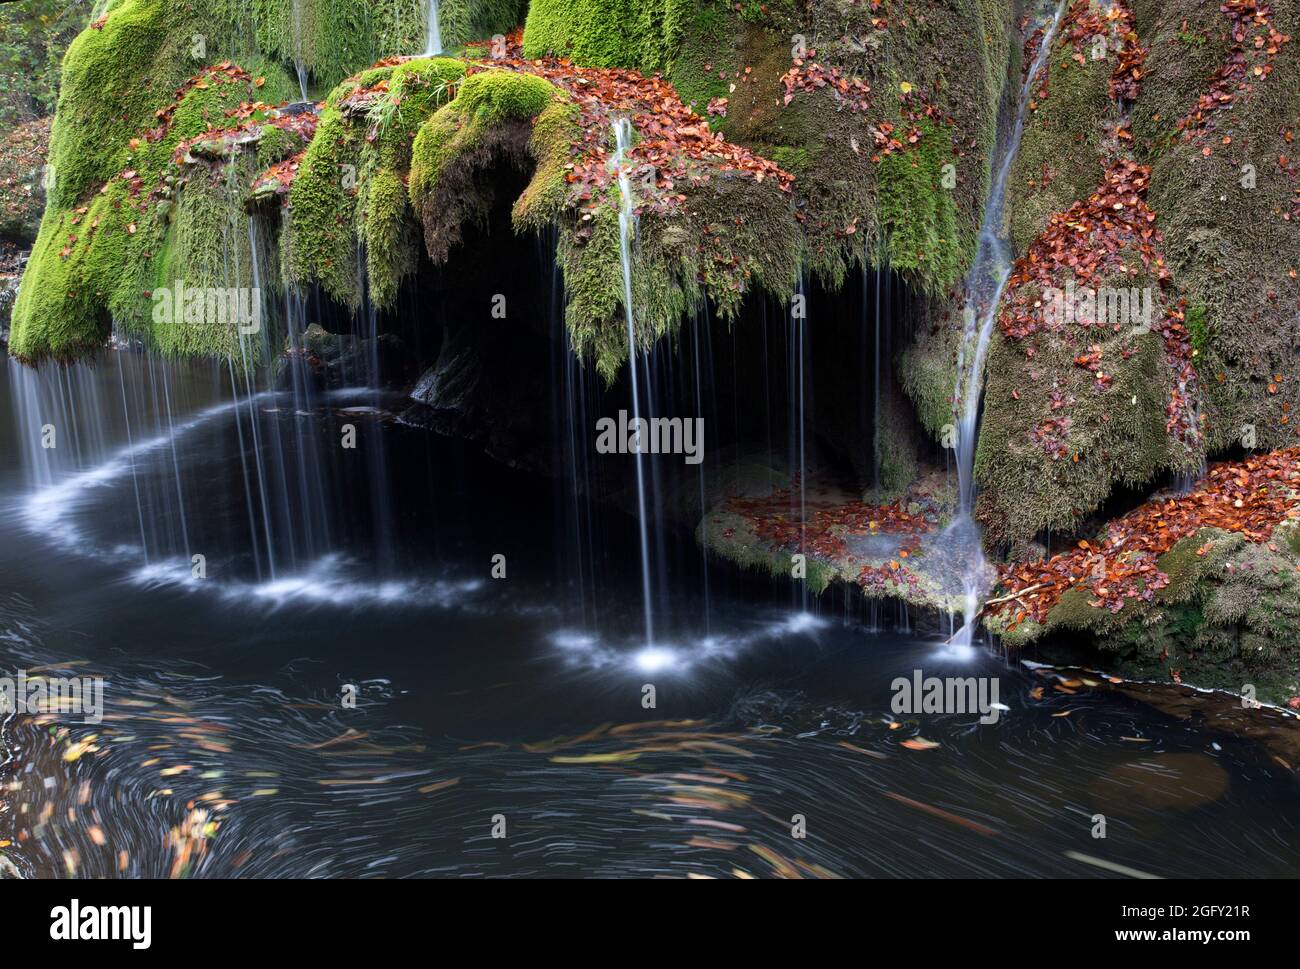 Bigar waterfall, one of the most beautiful waterfalls in the world, Romania Stock Photo